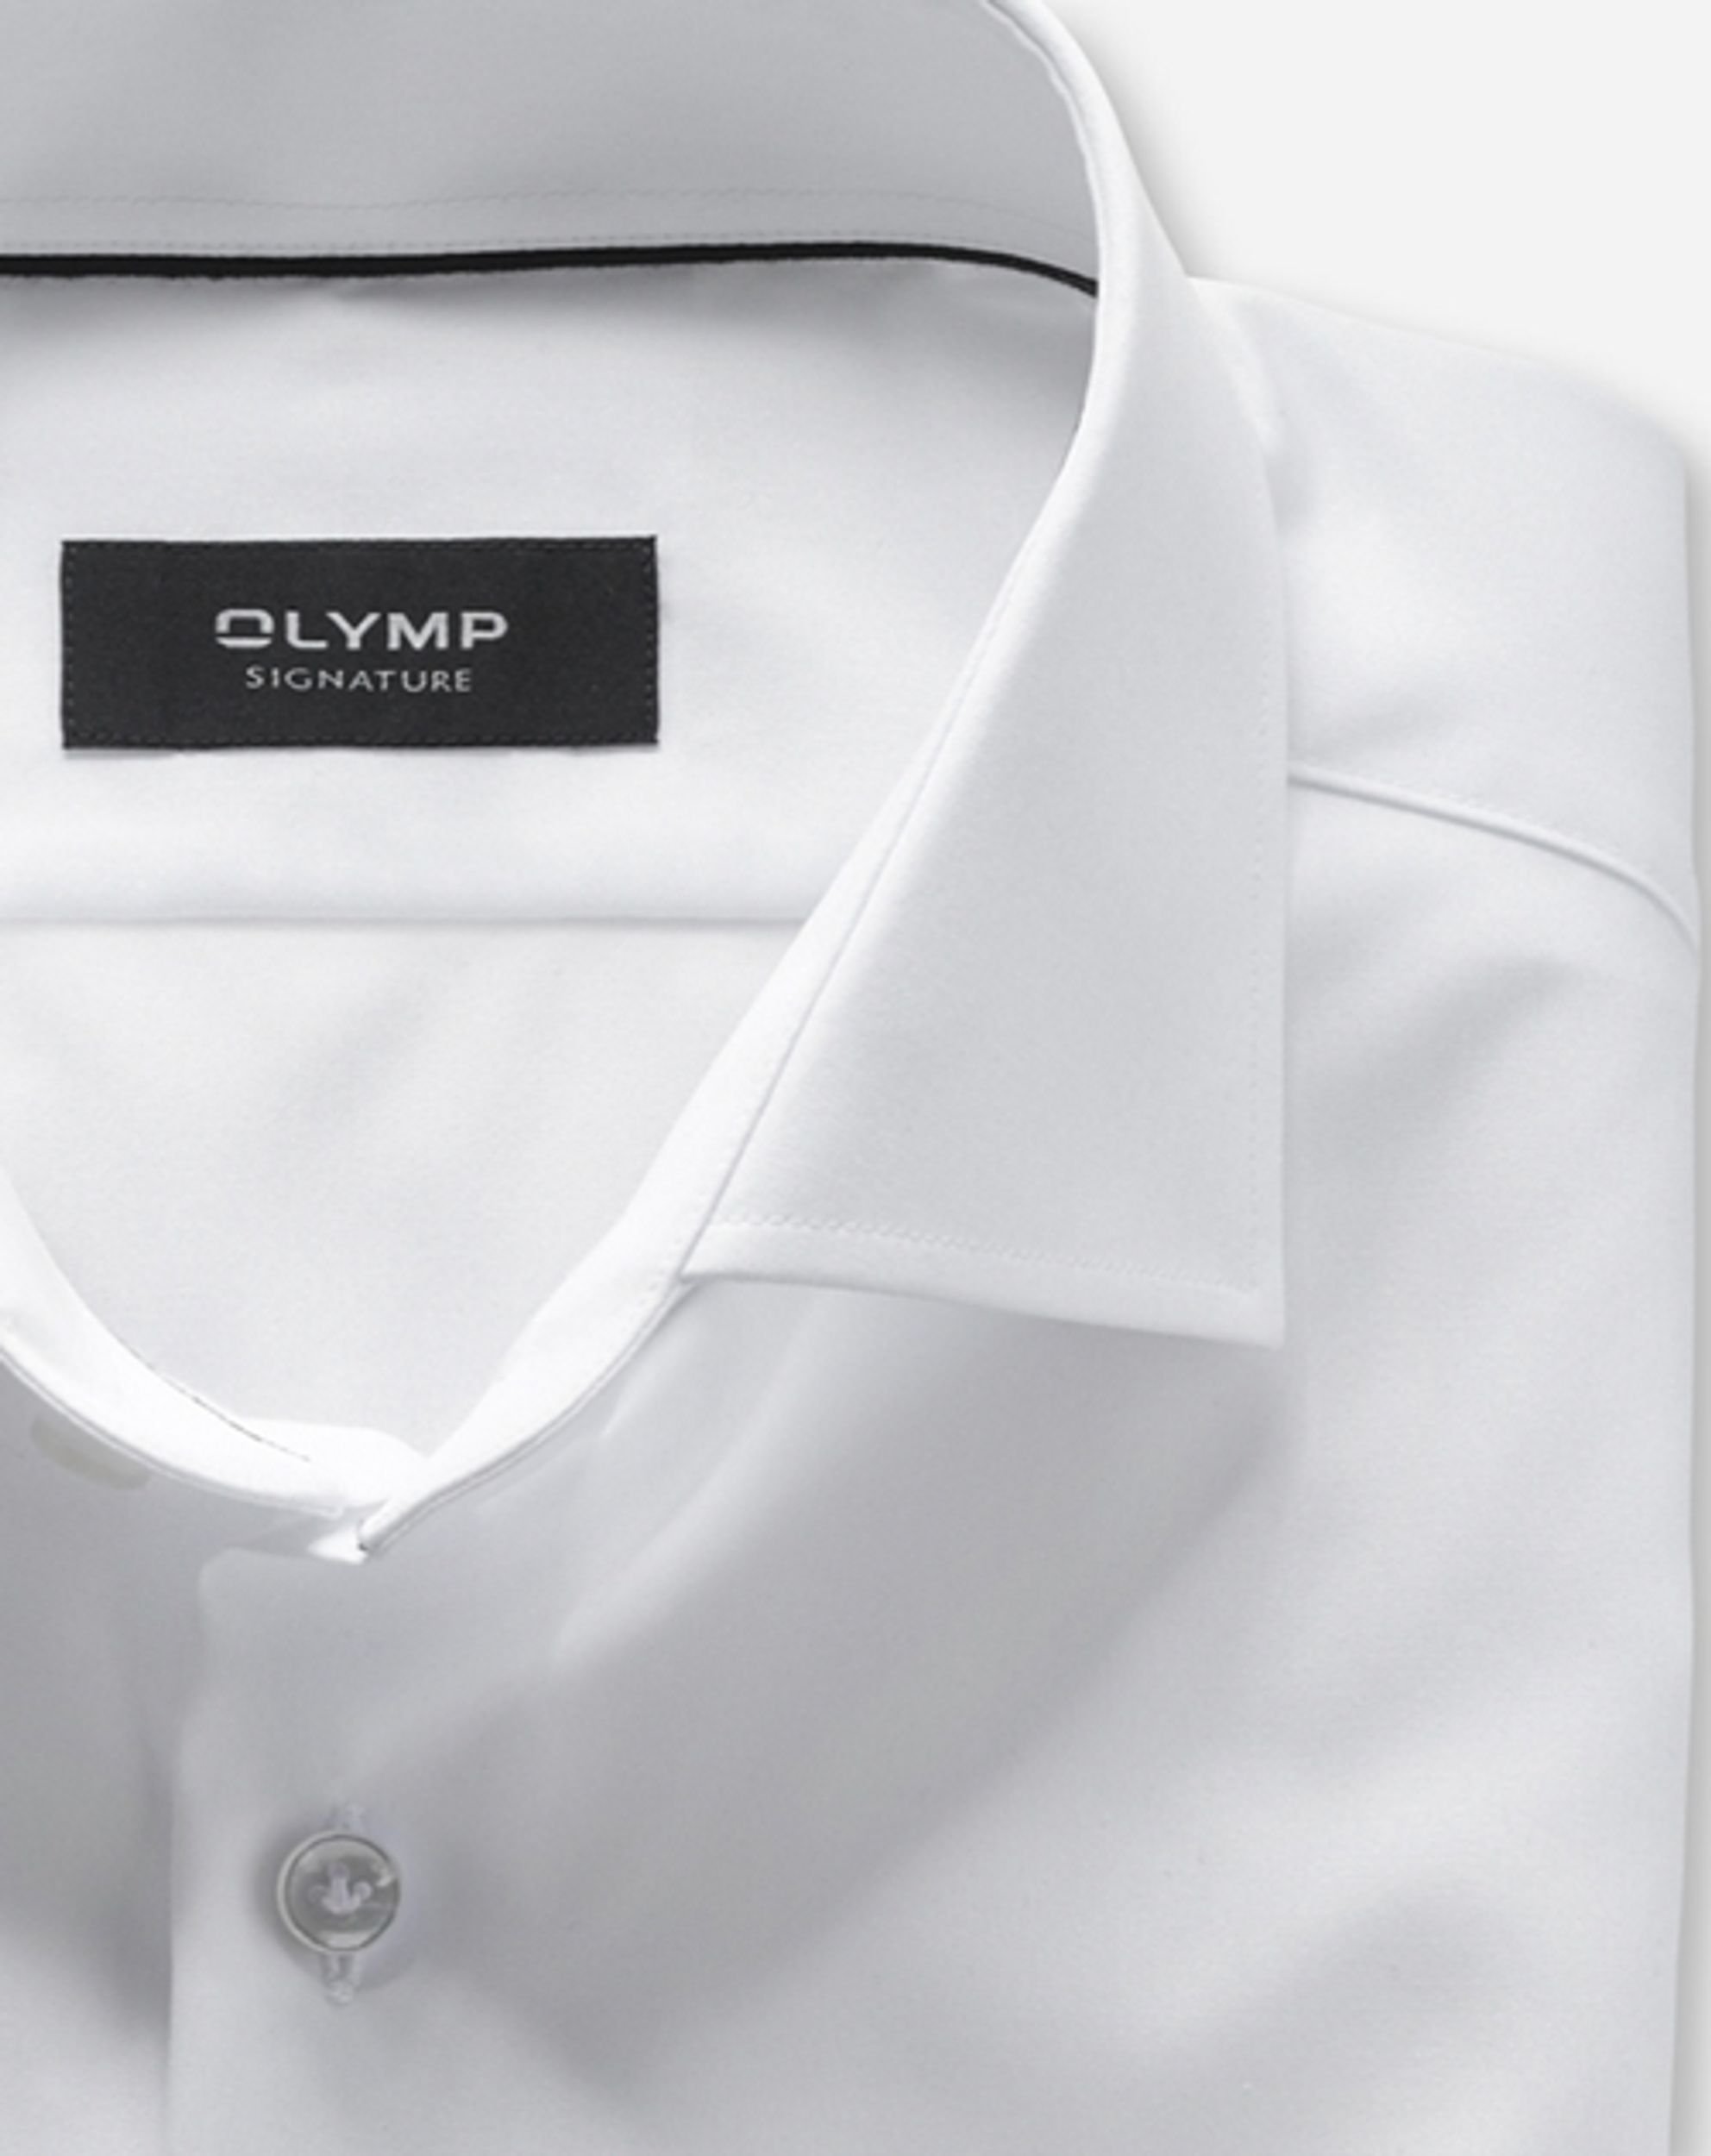 OLYMP Signature Hemd Modern Fit 